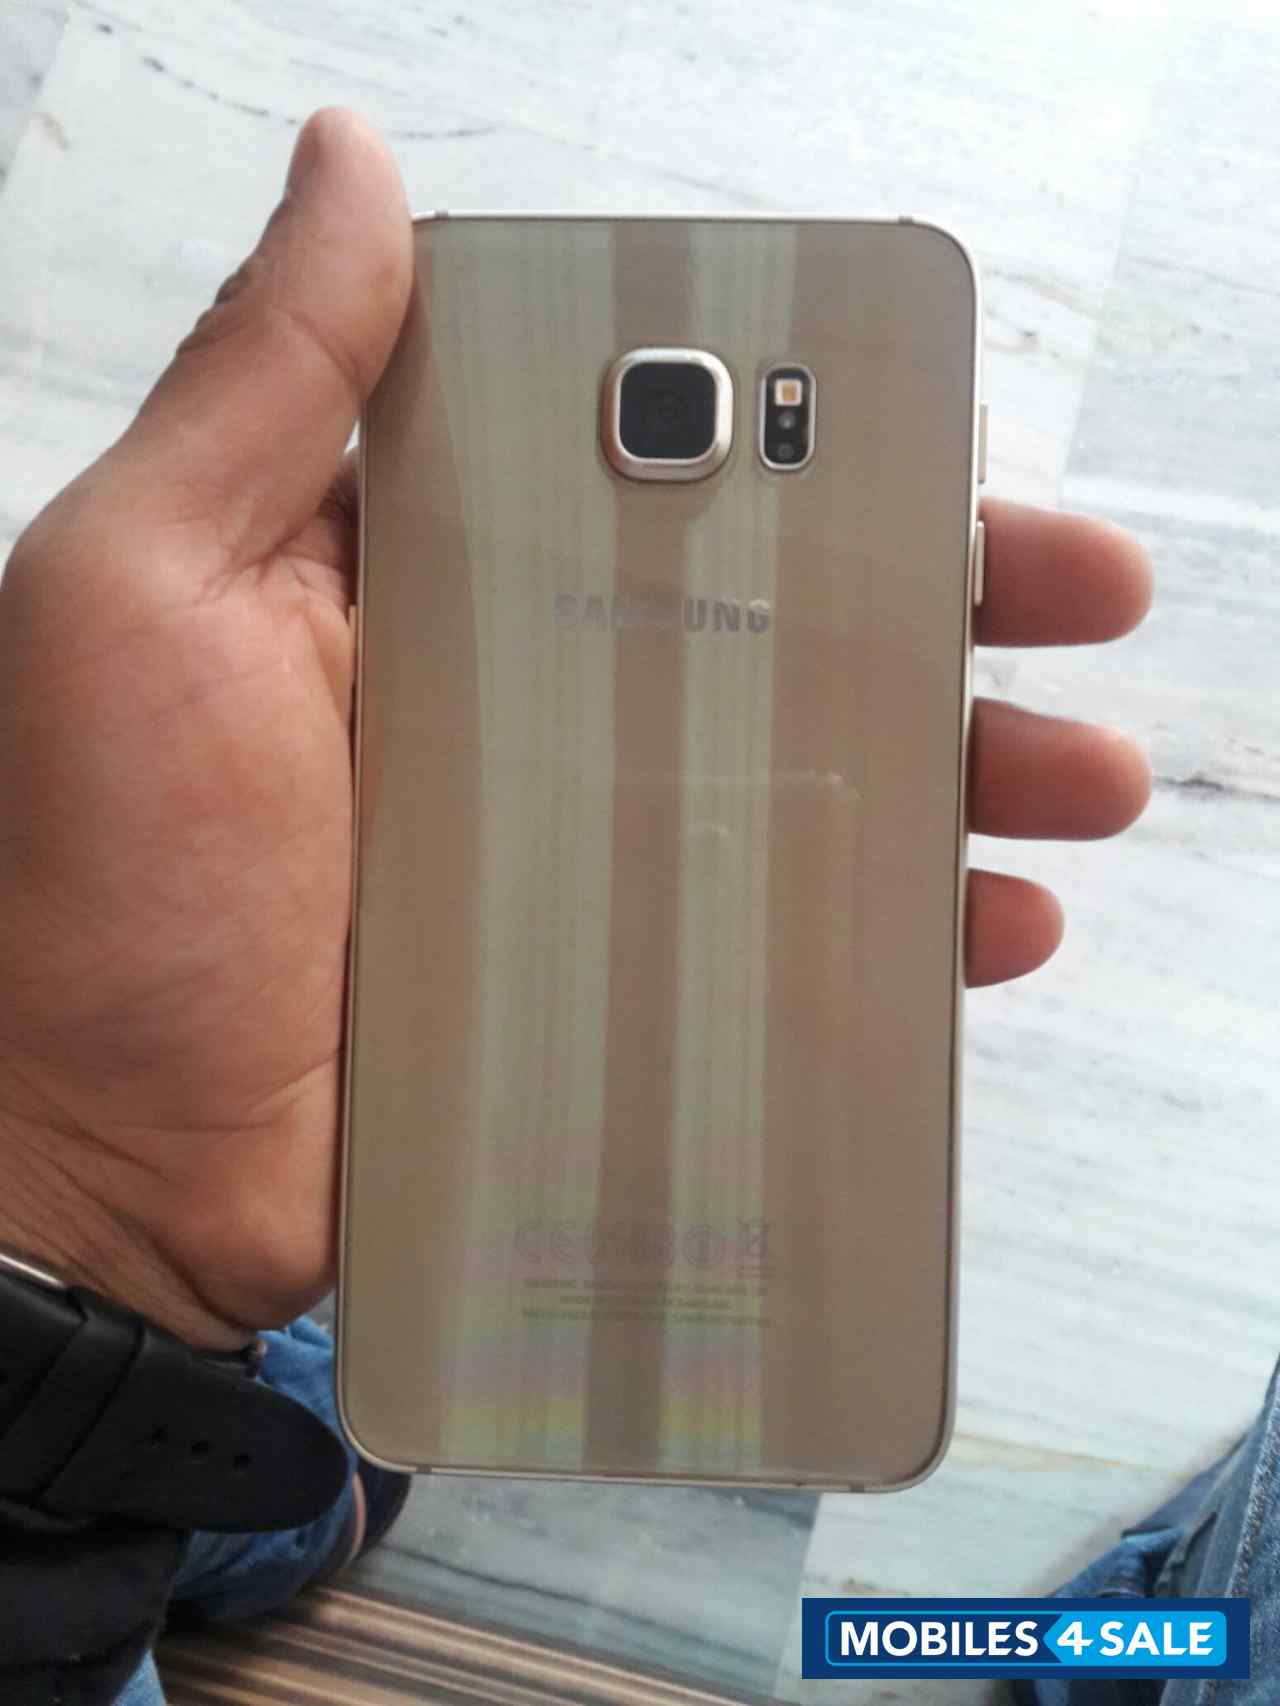 Gold Samsung Galaxy S6 Edge Plus